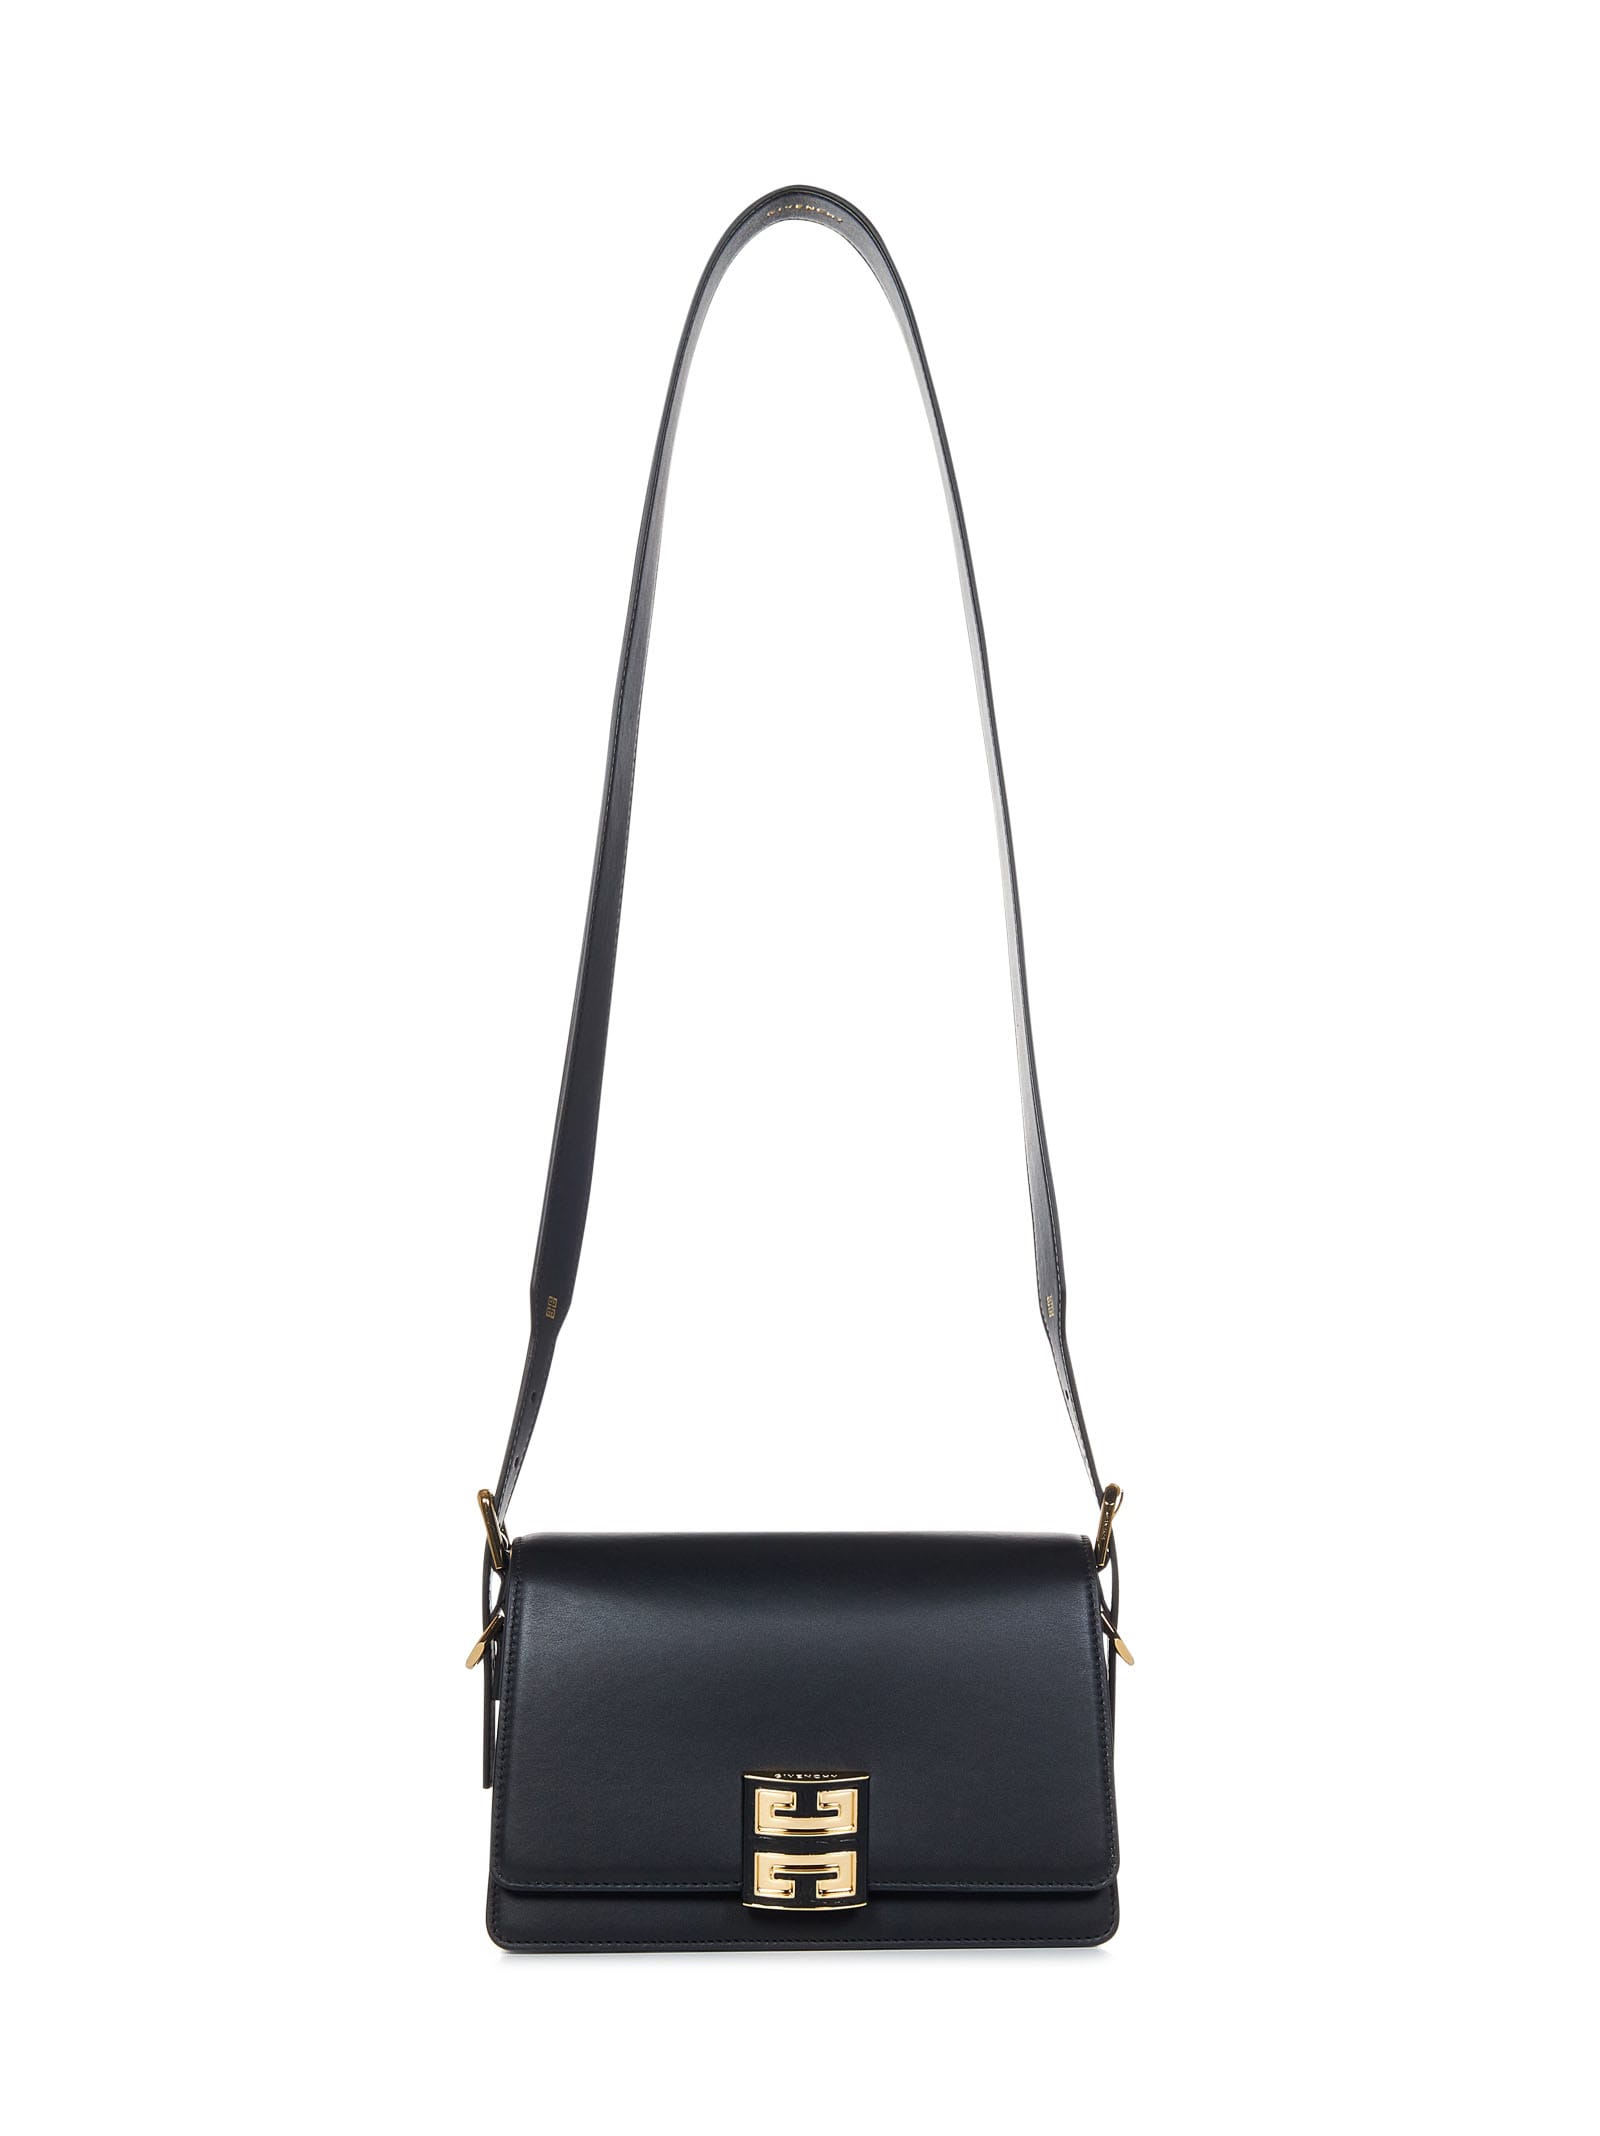 Givenchy 4g Crossbody Medium Shoulder Bag In Black